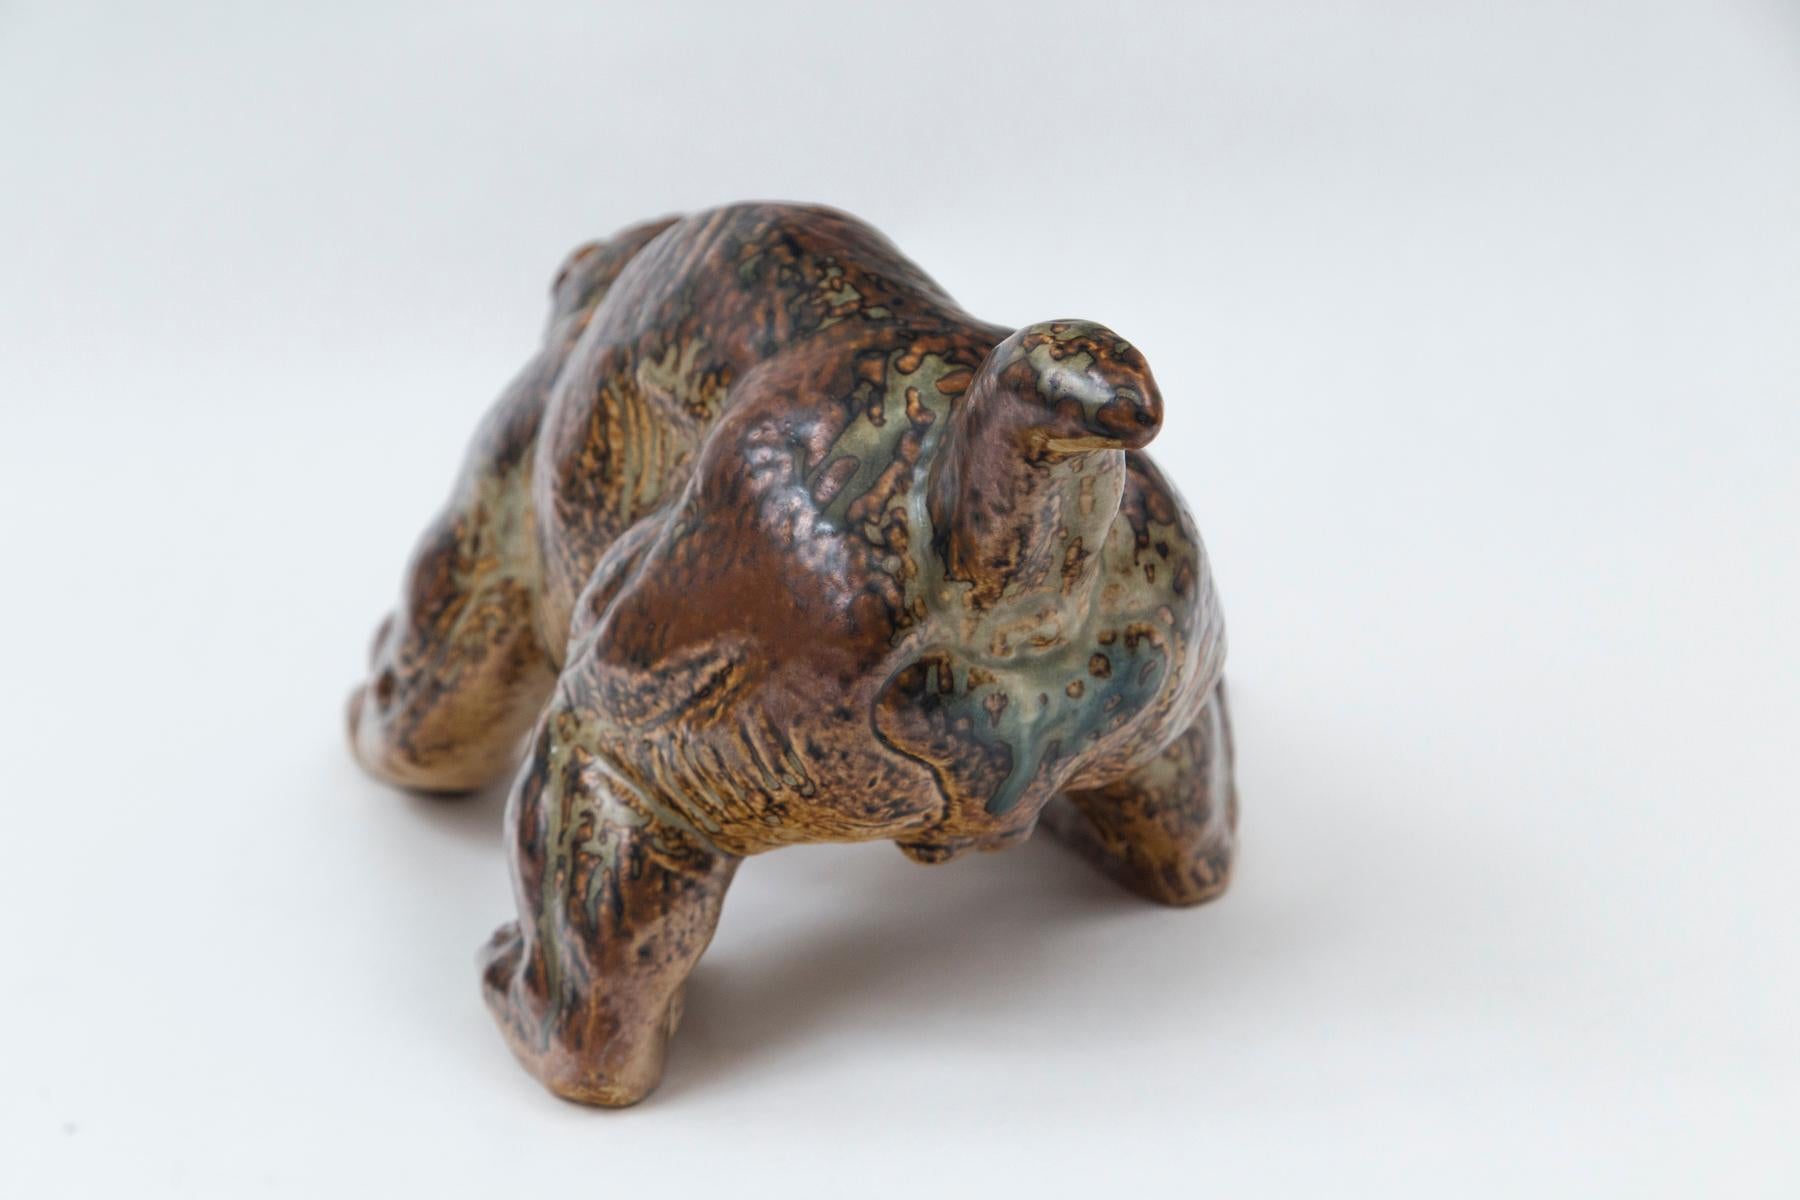 Scandinavian Knud Kyhn for Royal Copenhagen Ceramic Monkey Sculpture